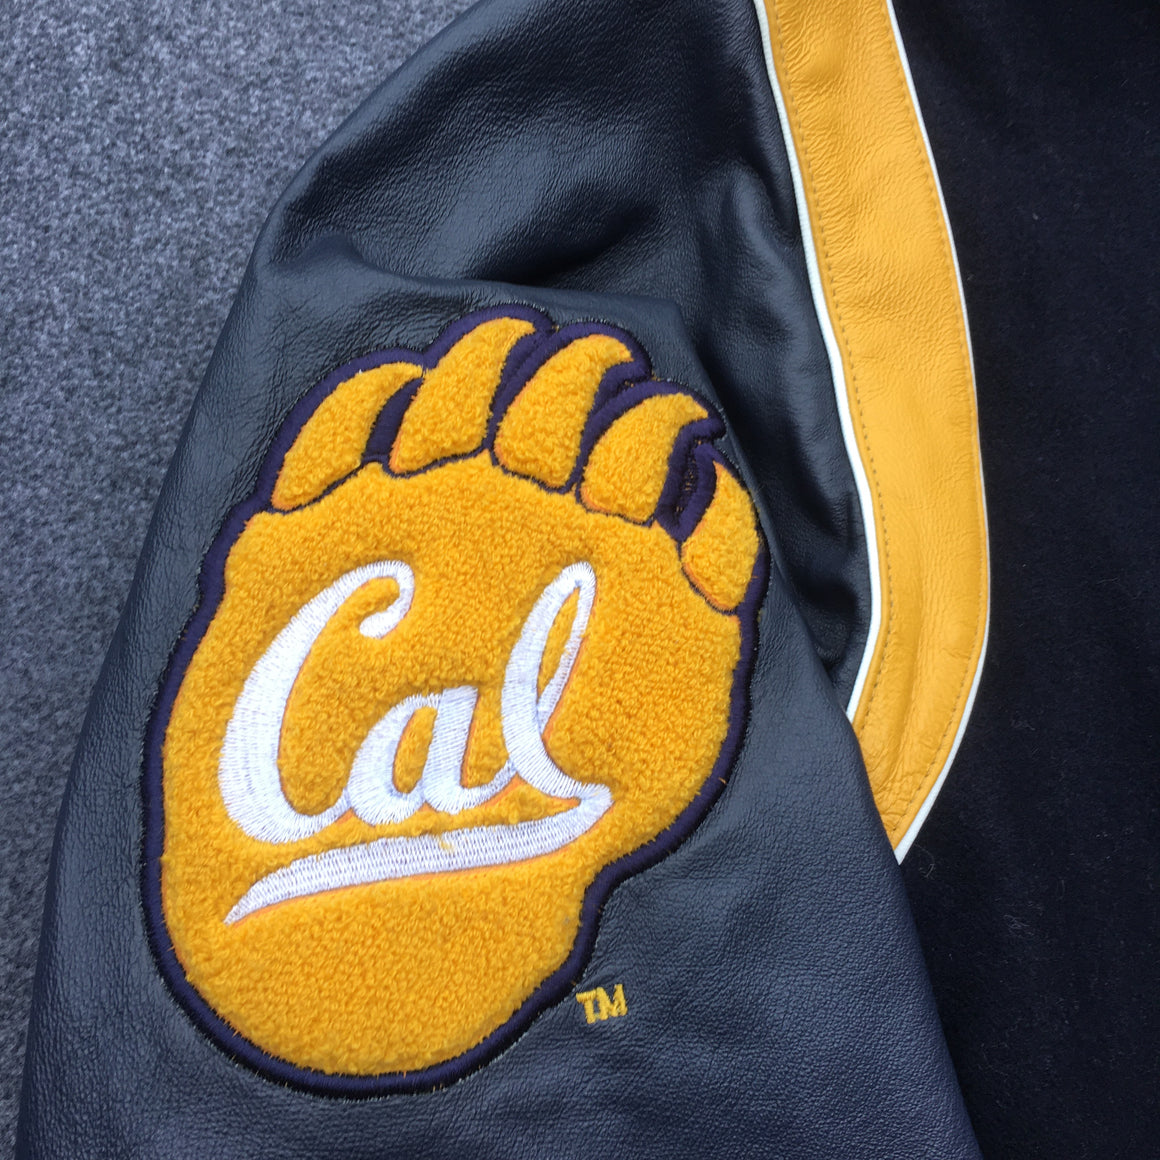 Cal Golden Bears reversible jacket - M / L